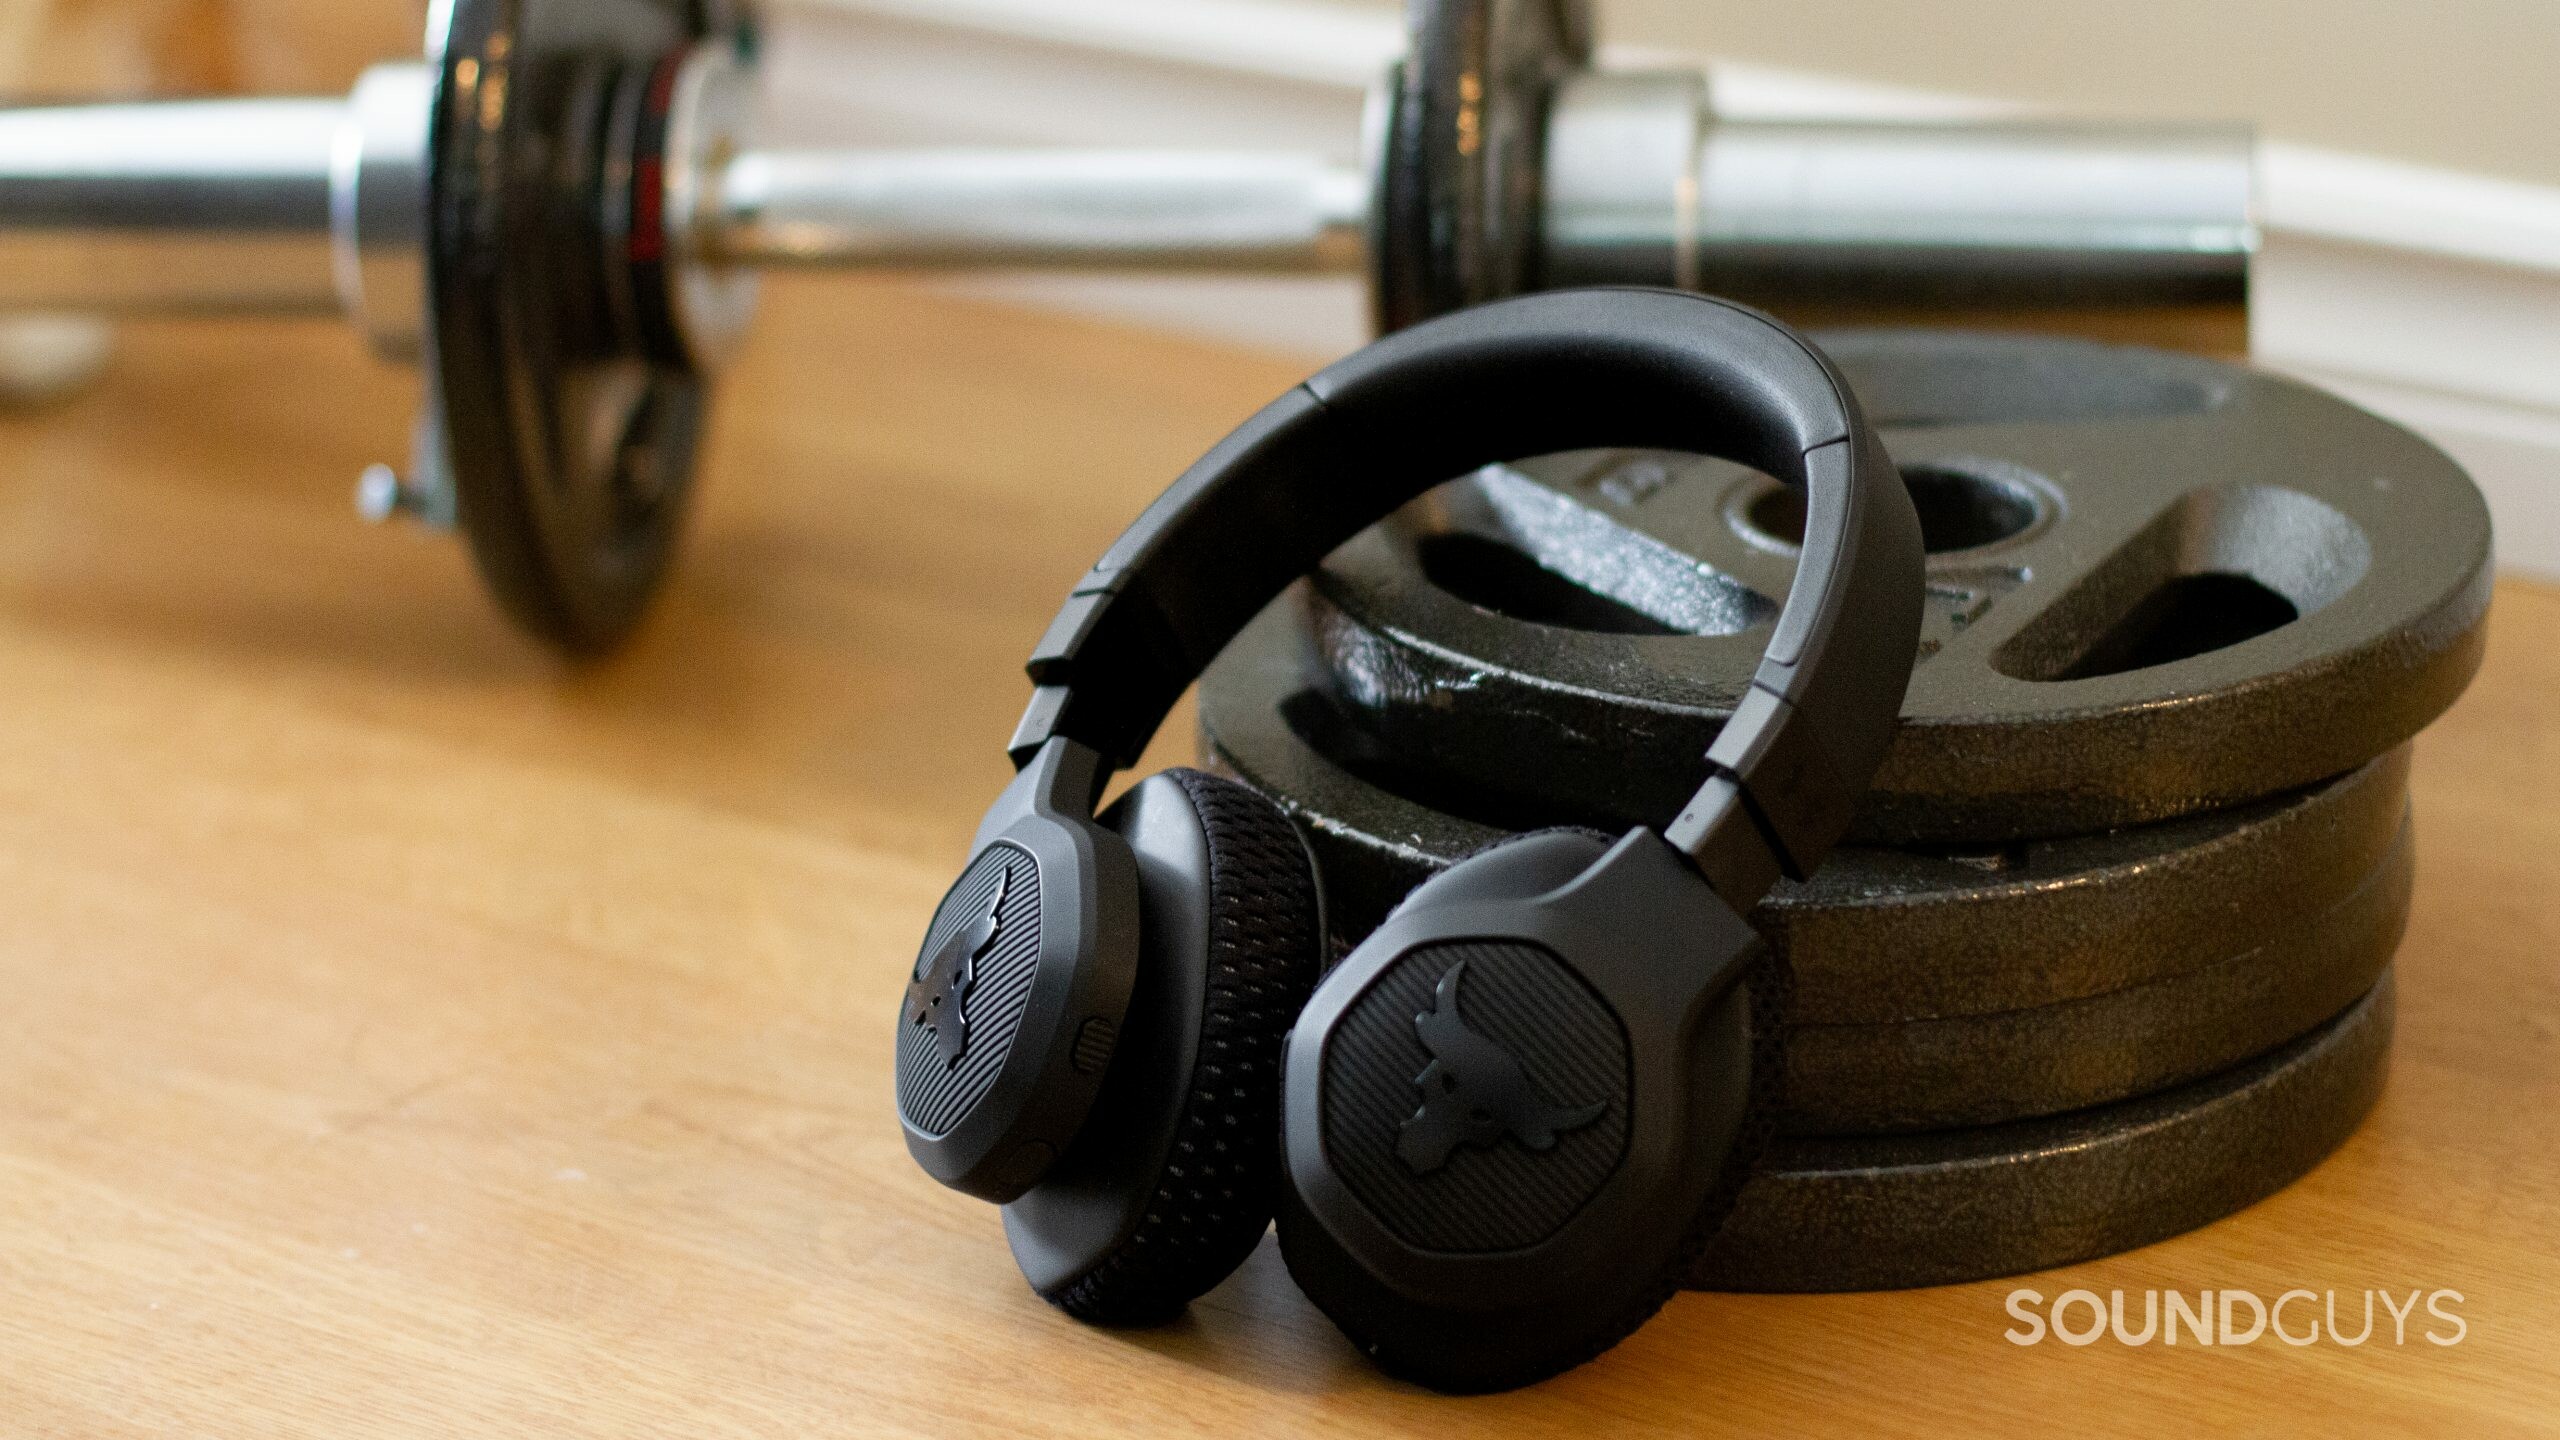 Soportar Específicamente Ondular Under Armour Project Rock Over-Ear Training Headphones by JBL review -  SoundGuys